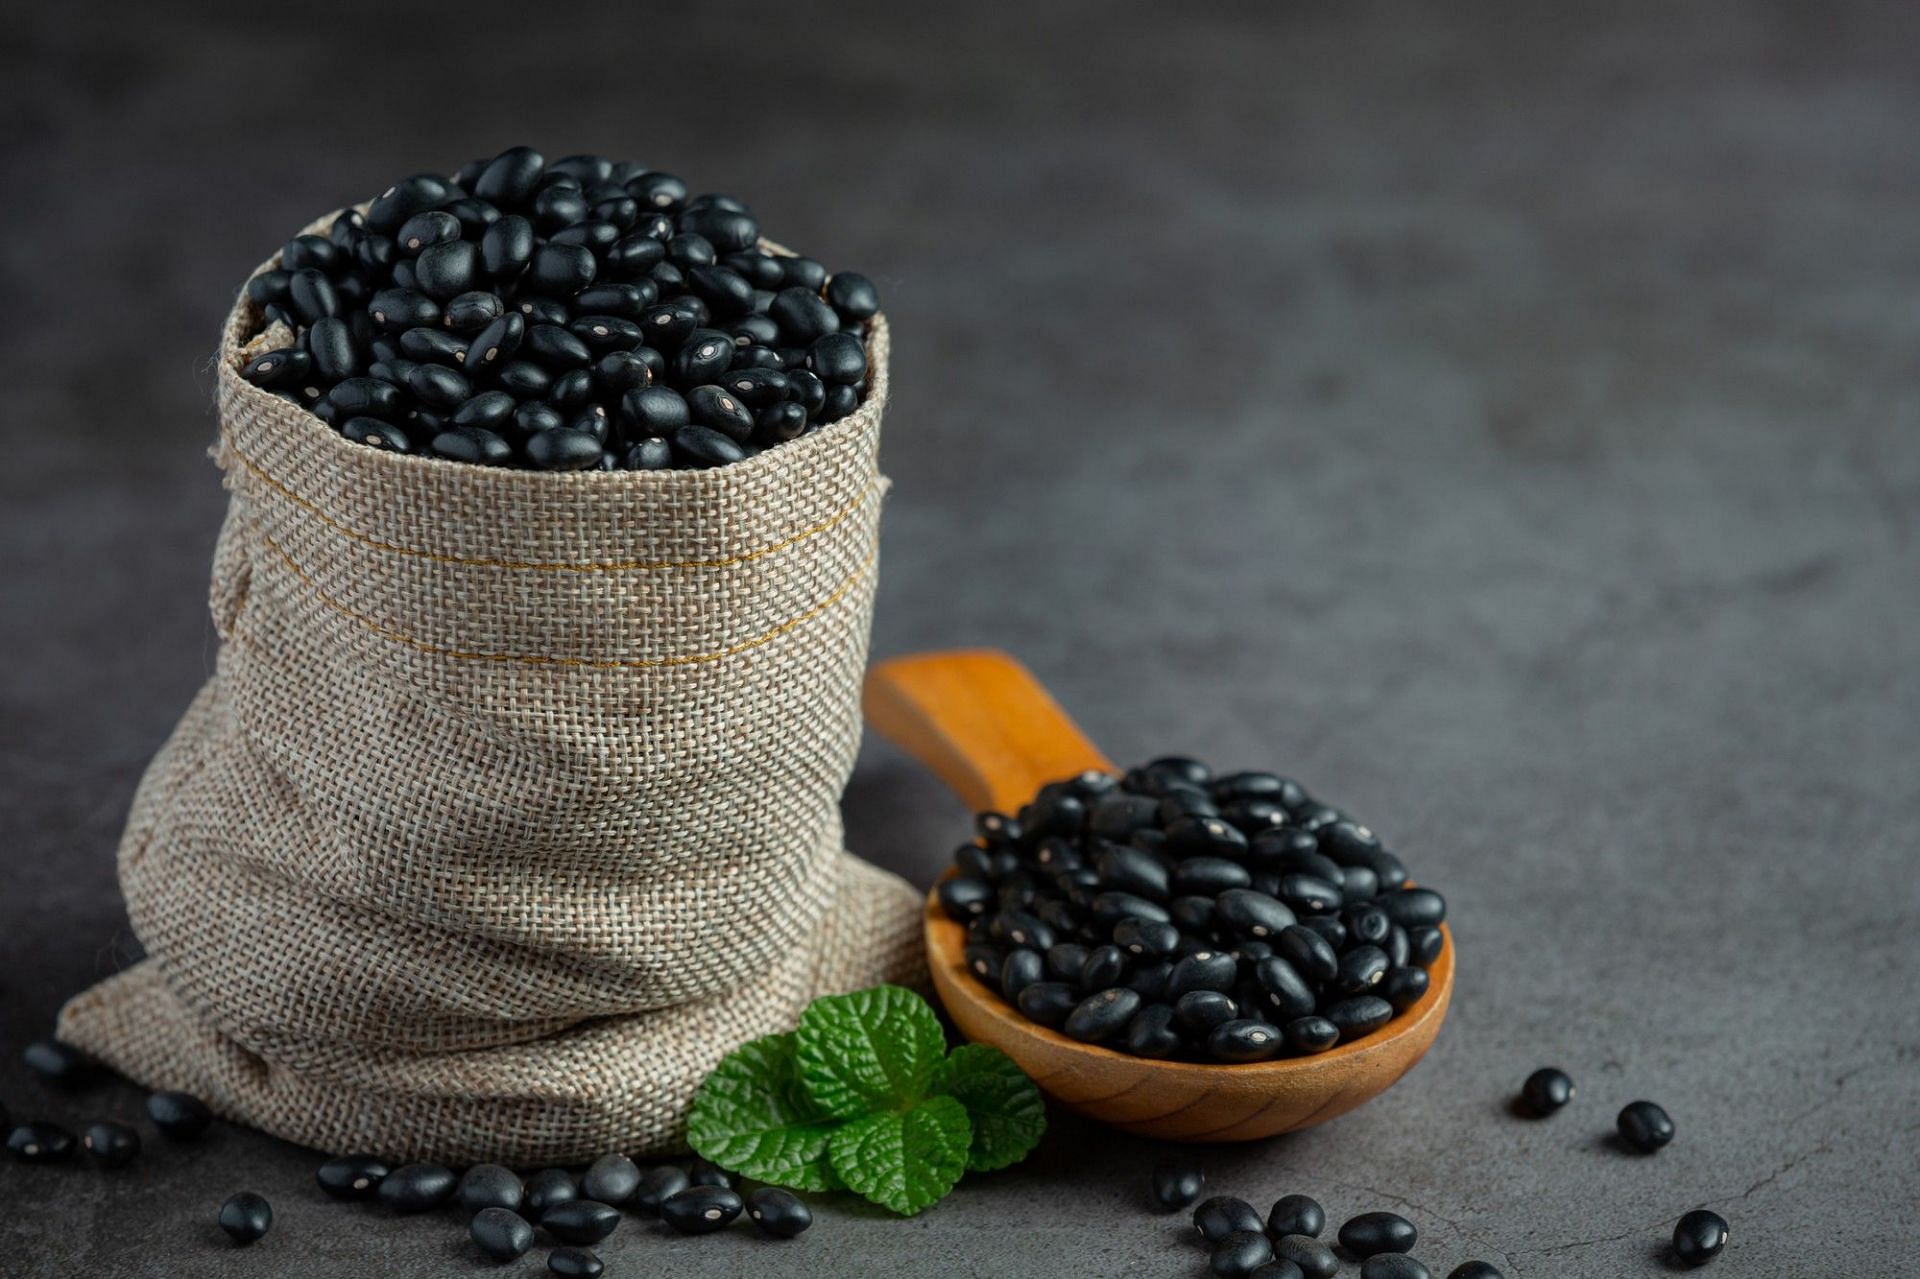 Black beans contain antioxidants. (Photo via Freepik/jcomp)